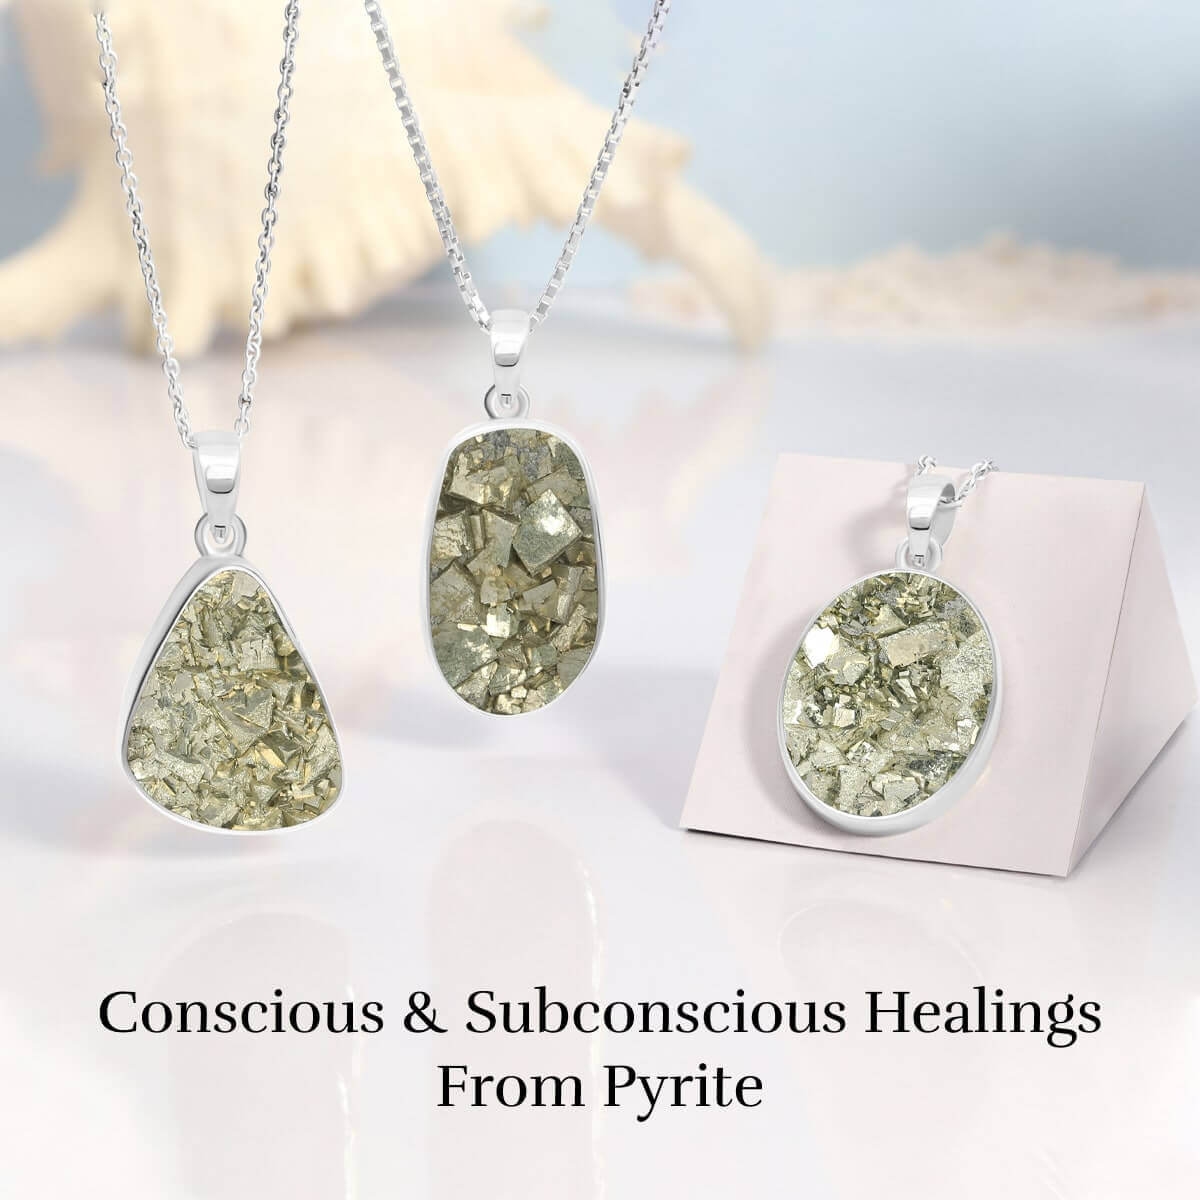 Pyrite stone Mental & Emotional Healing Properties